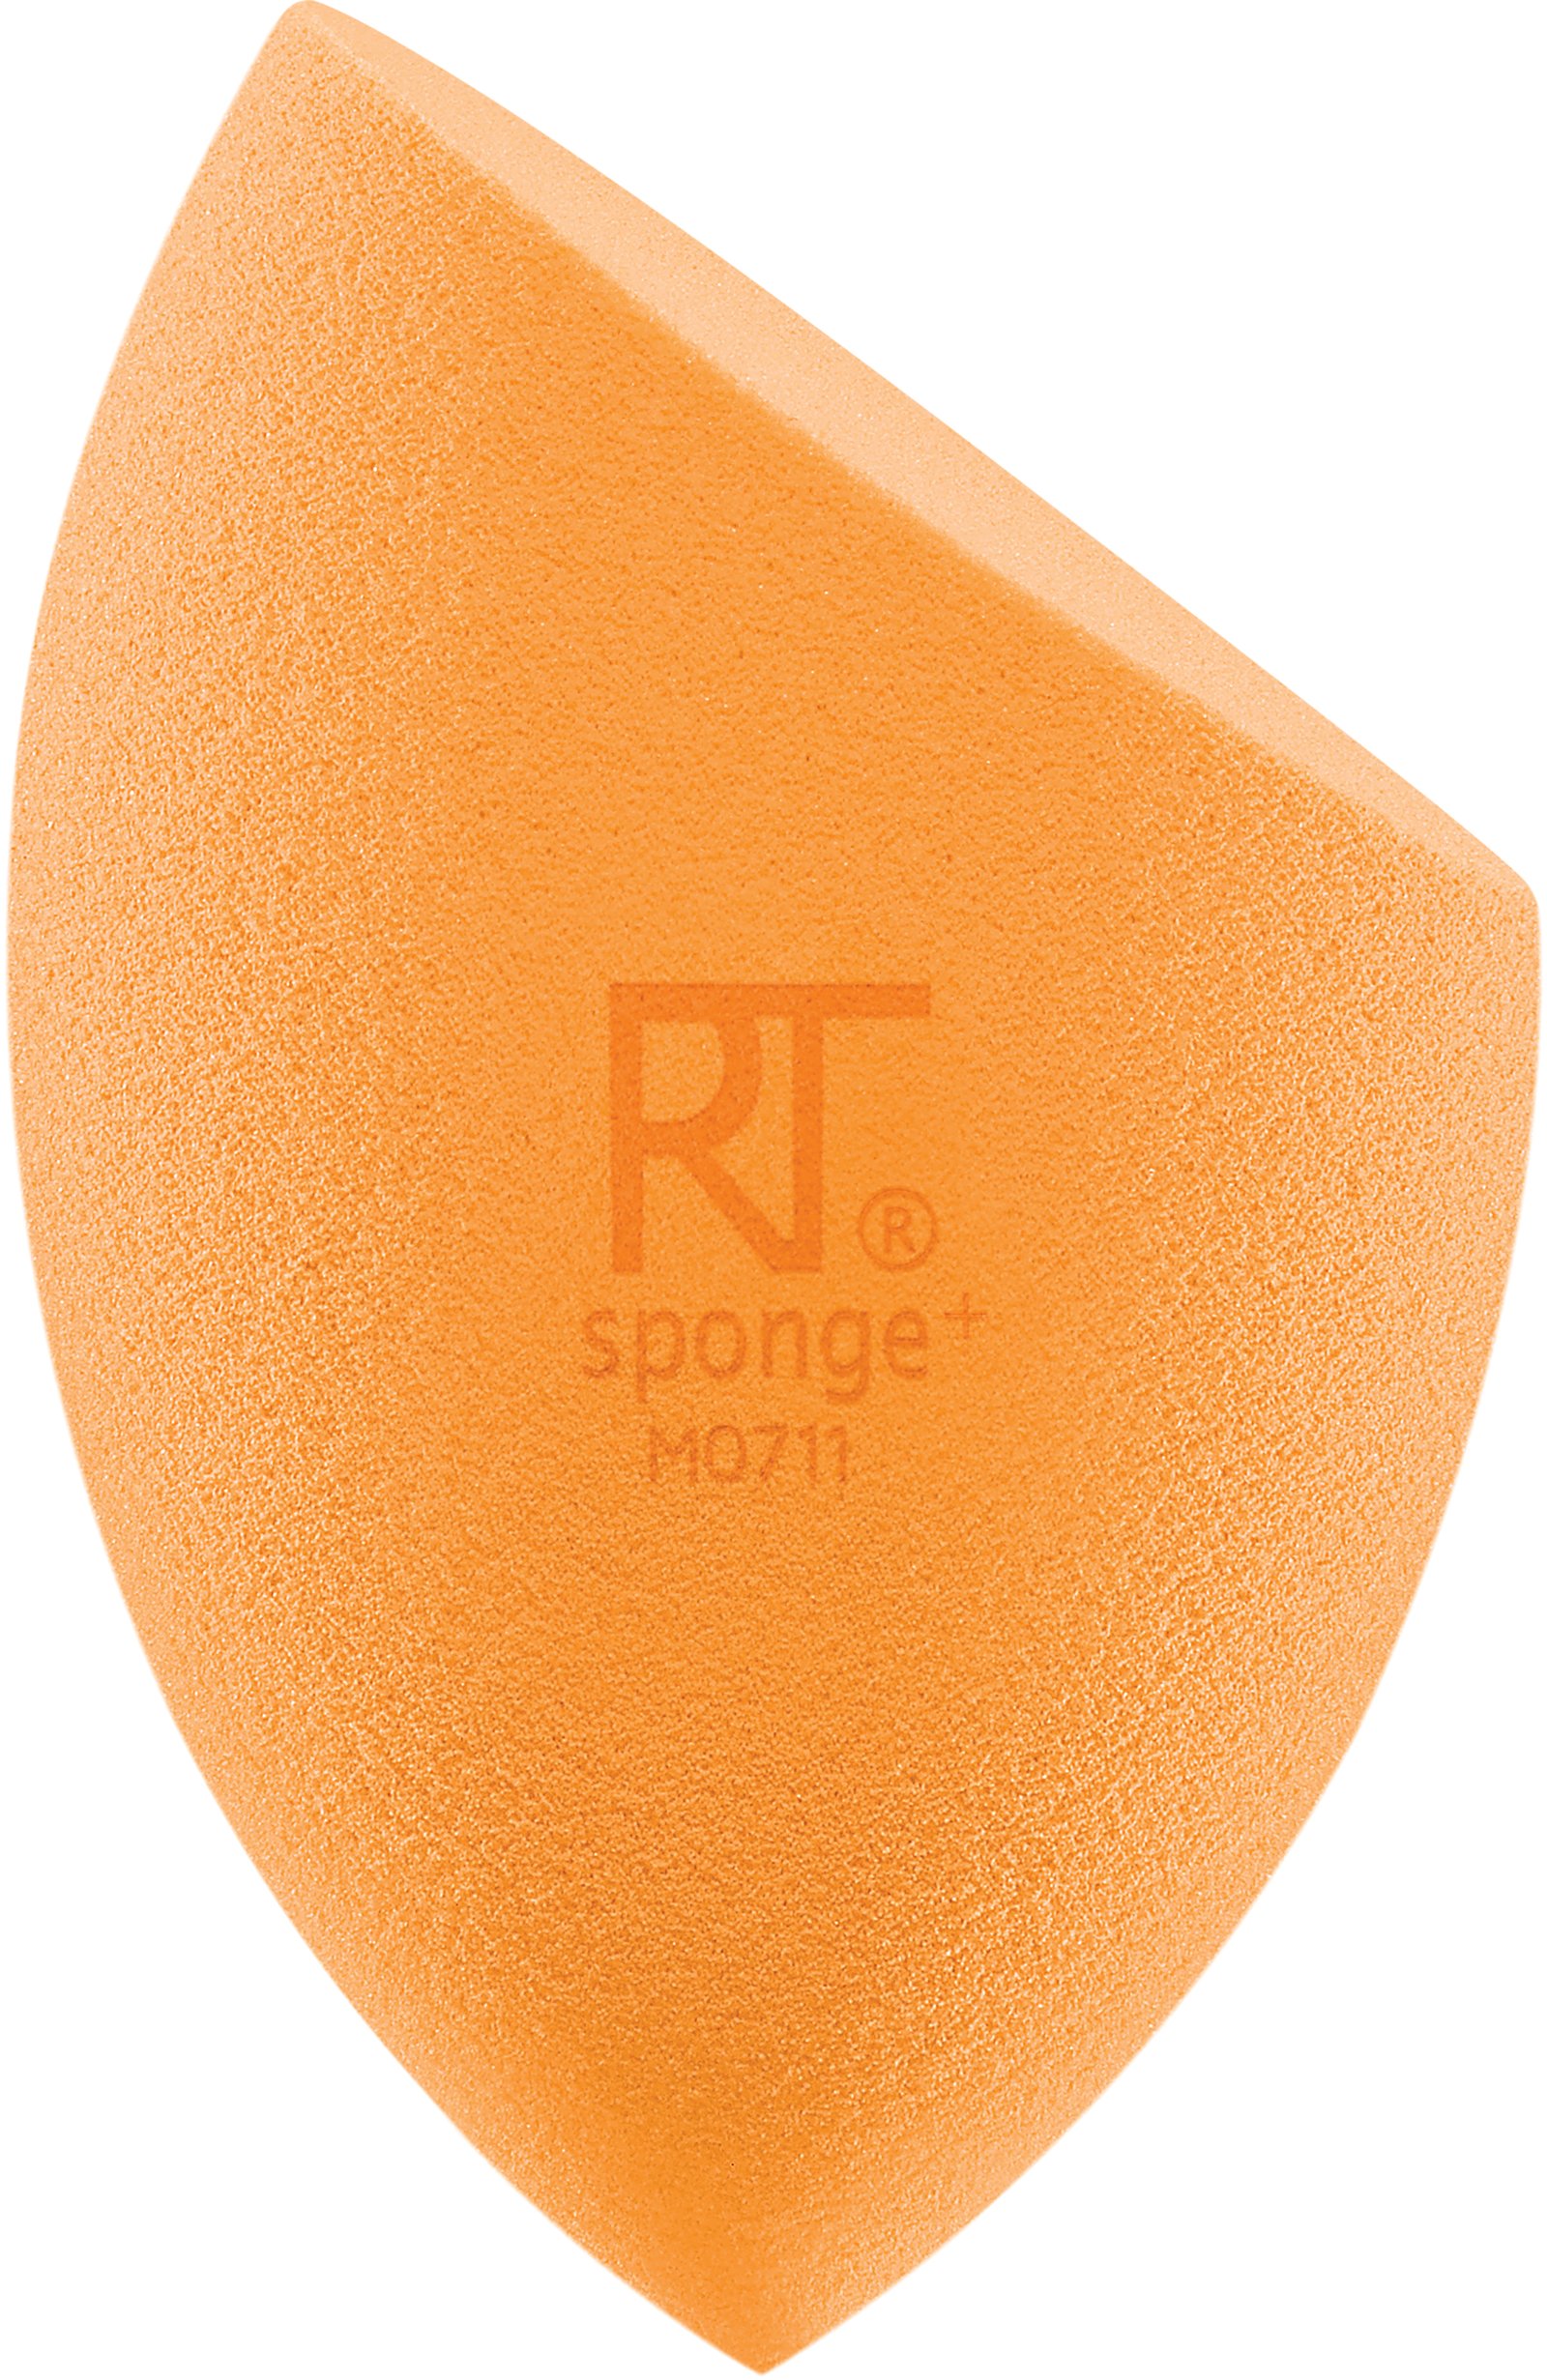 REAL TECHNIQUES Miracle Complexion Sponge 1 st